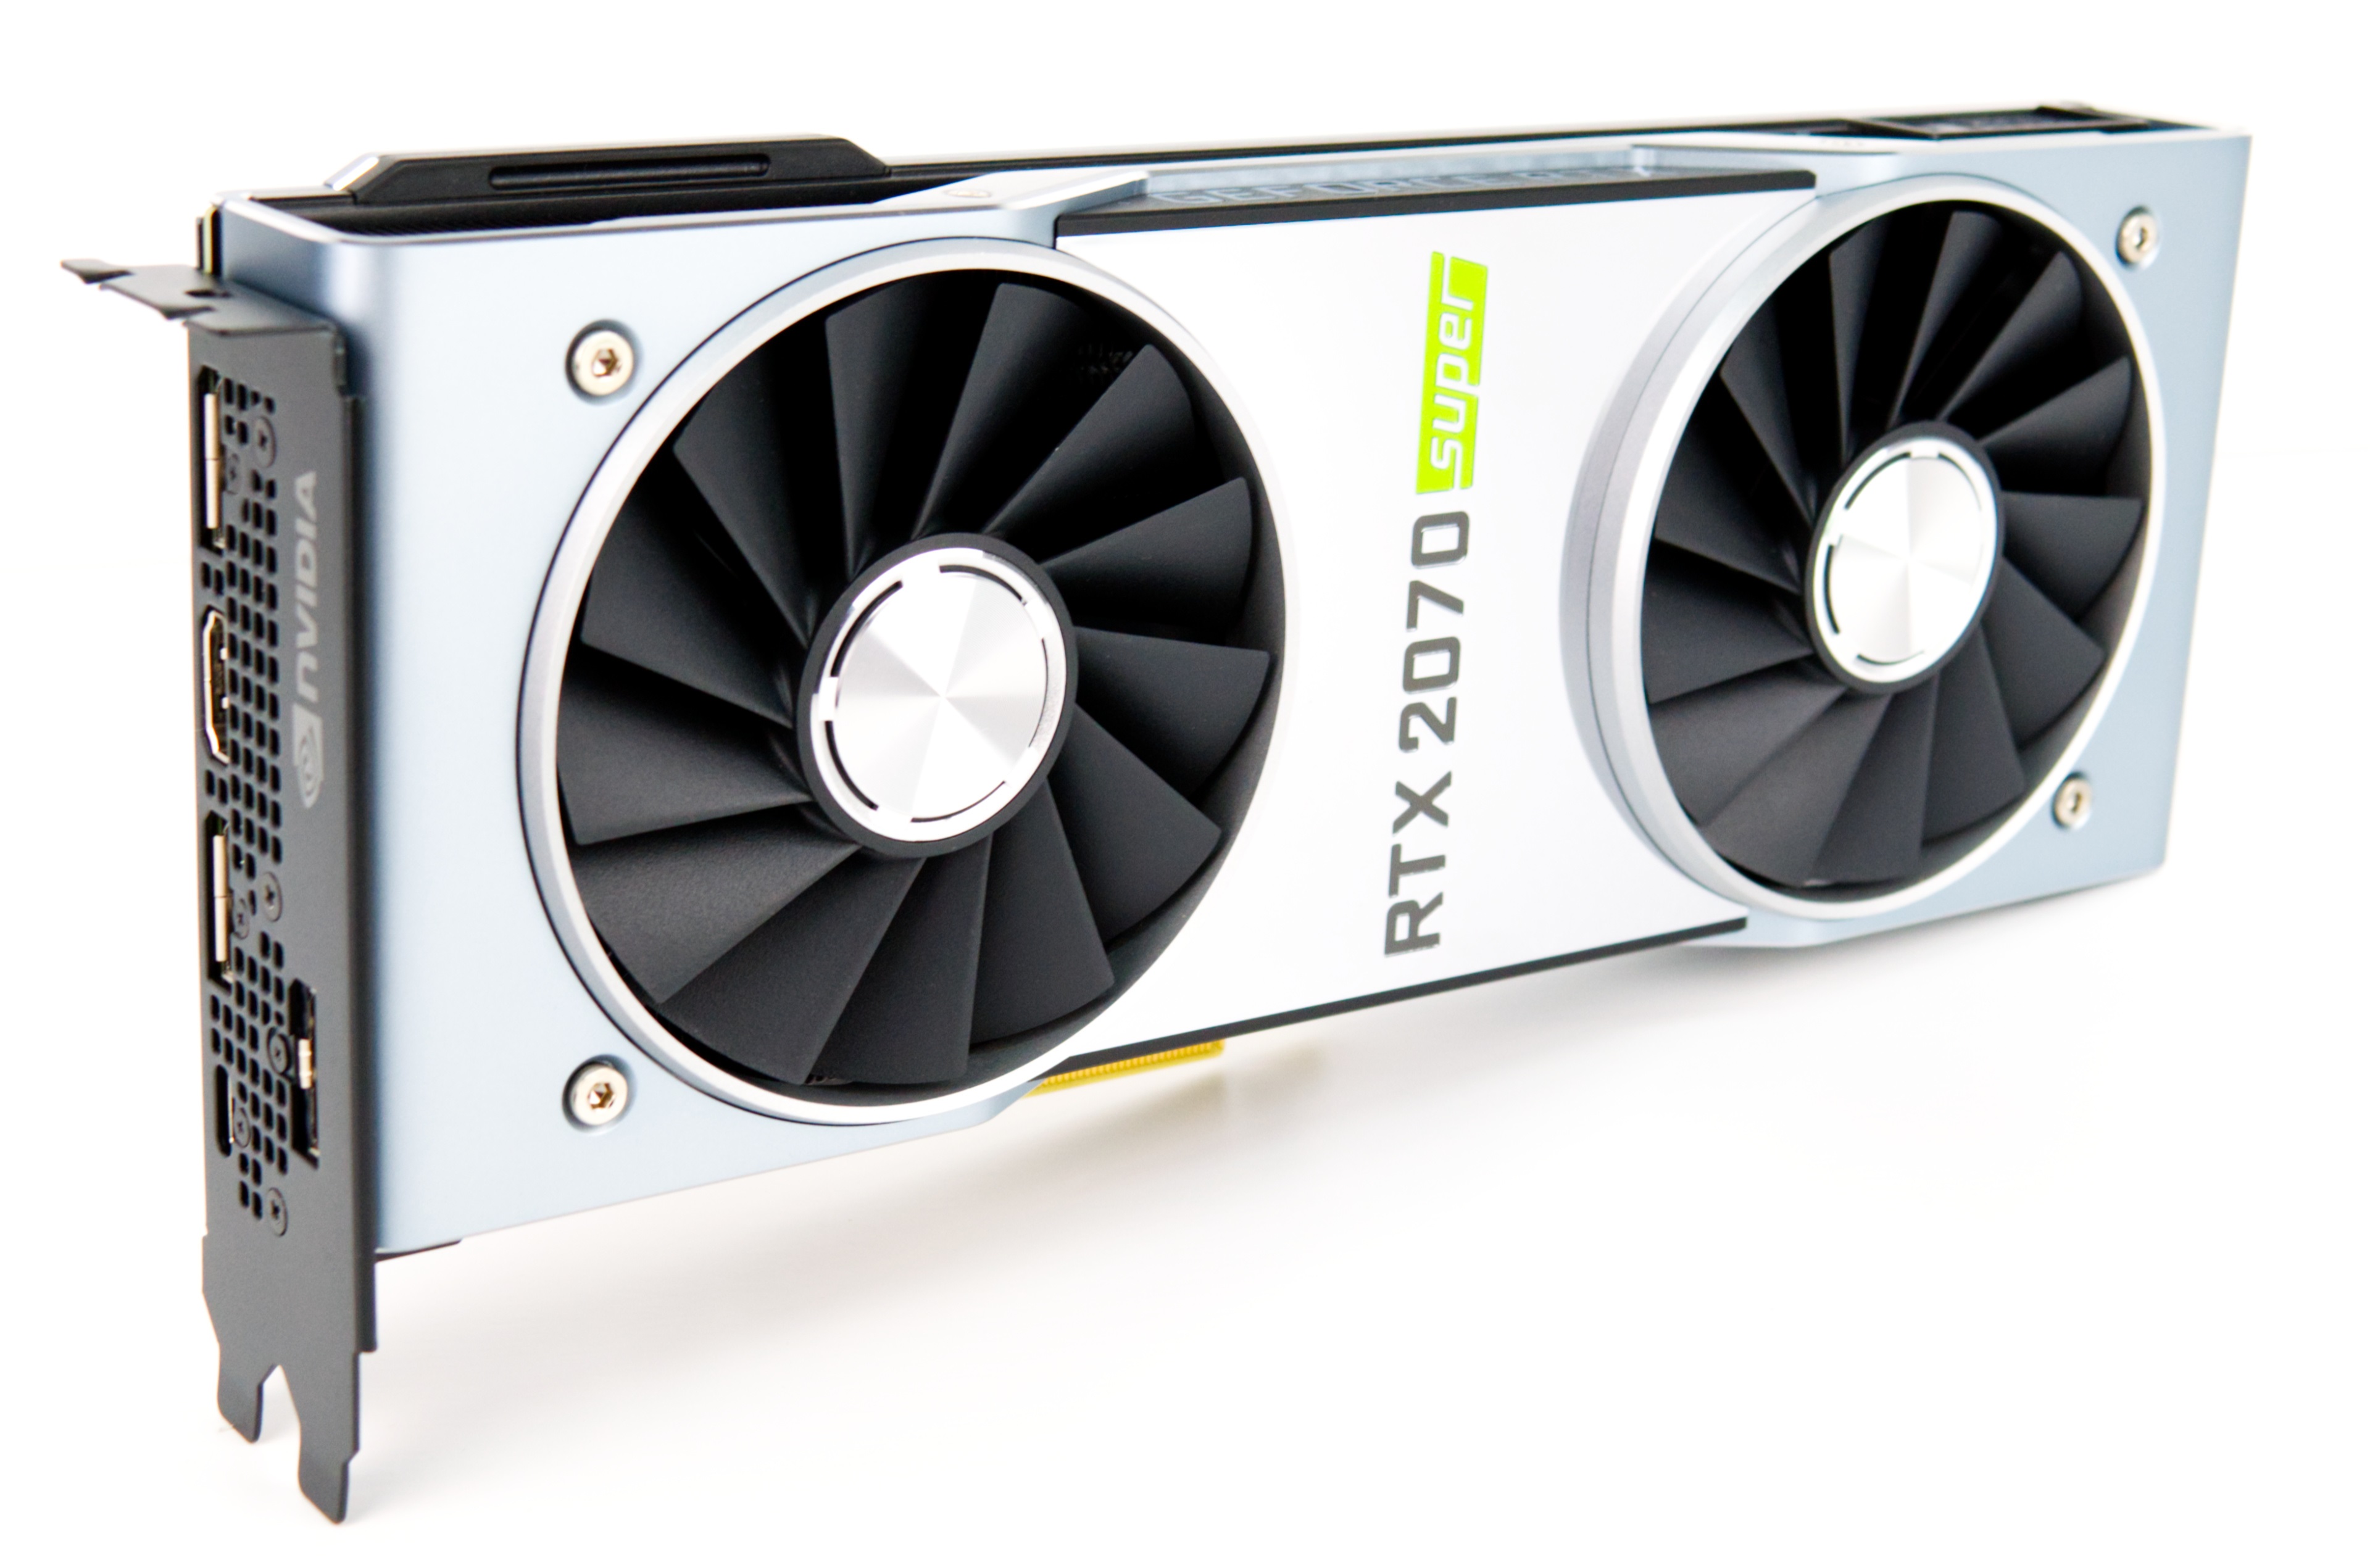 NVIDIA GeForce RTX 2070 SUPER Desktop GPU Review: In touching ...